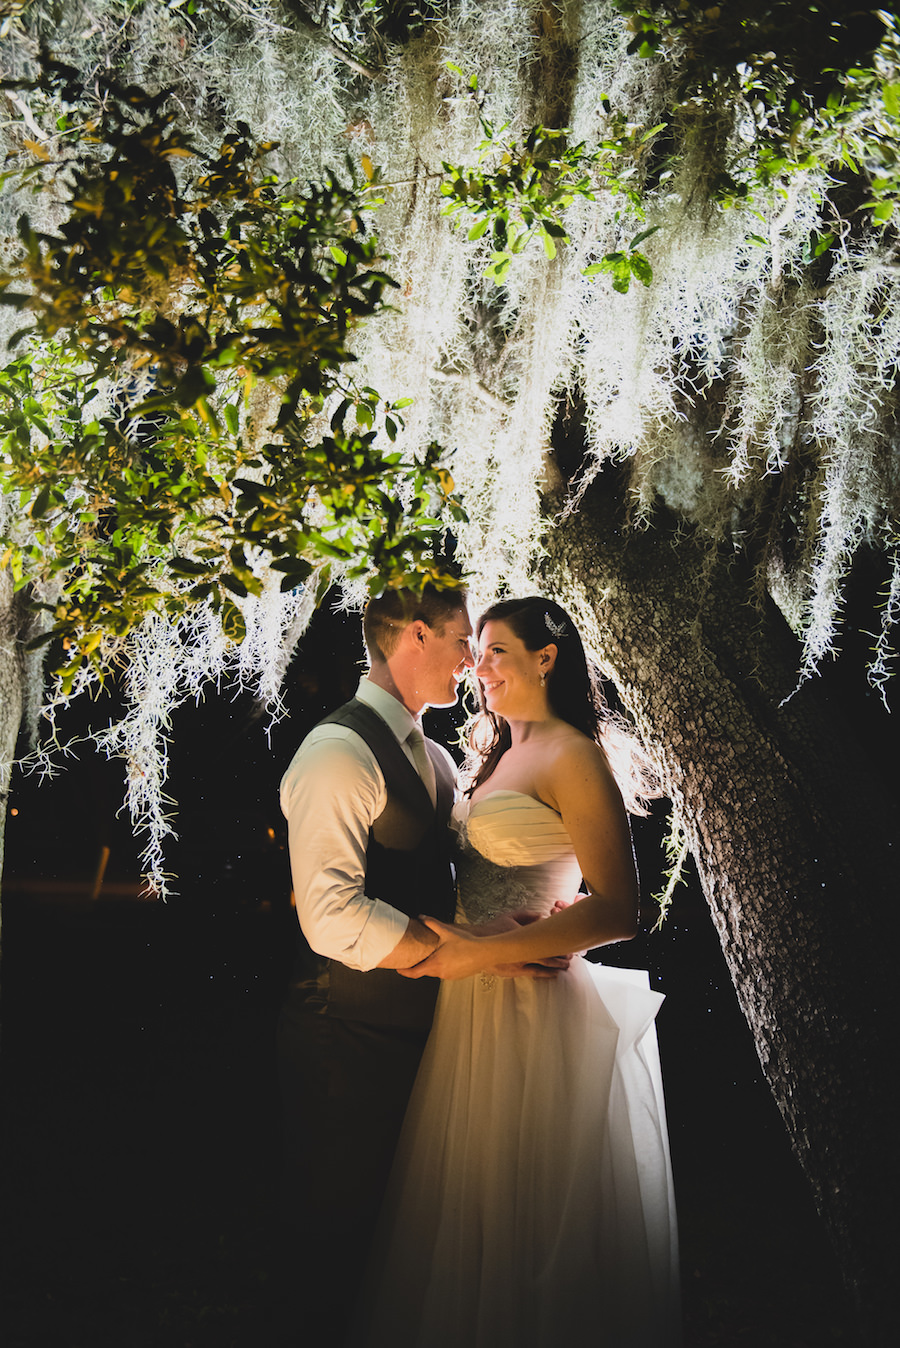 Bride and Groom Nighttime Wedding Portrait Under Spanish Moss | South Tampa Wedding Photographer Kera Photography